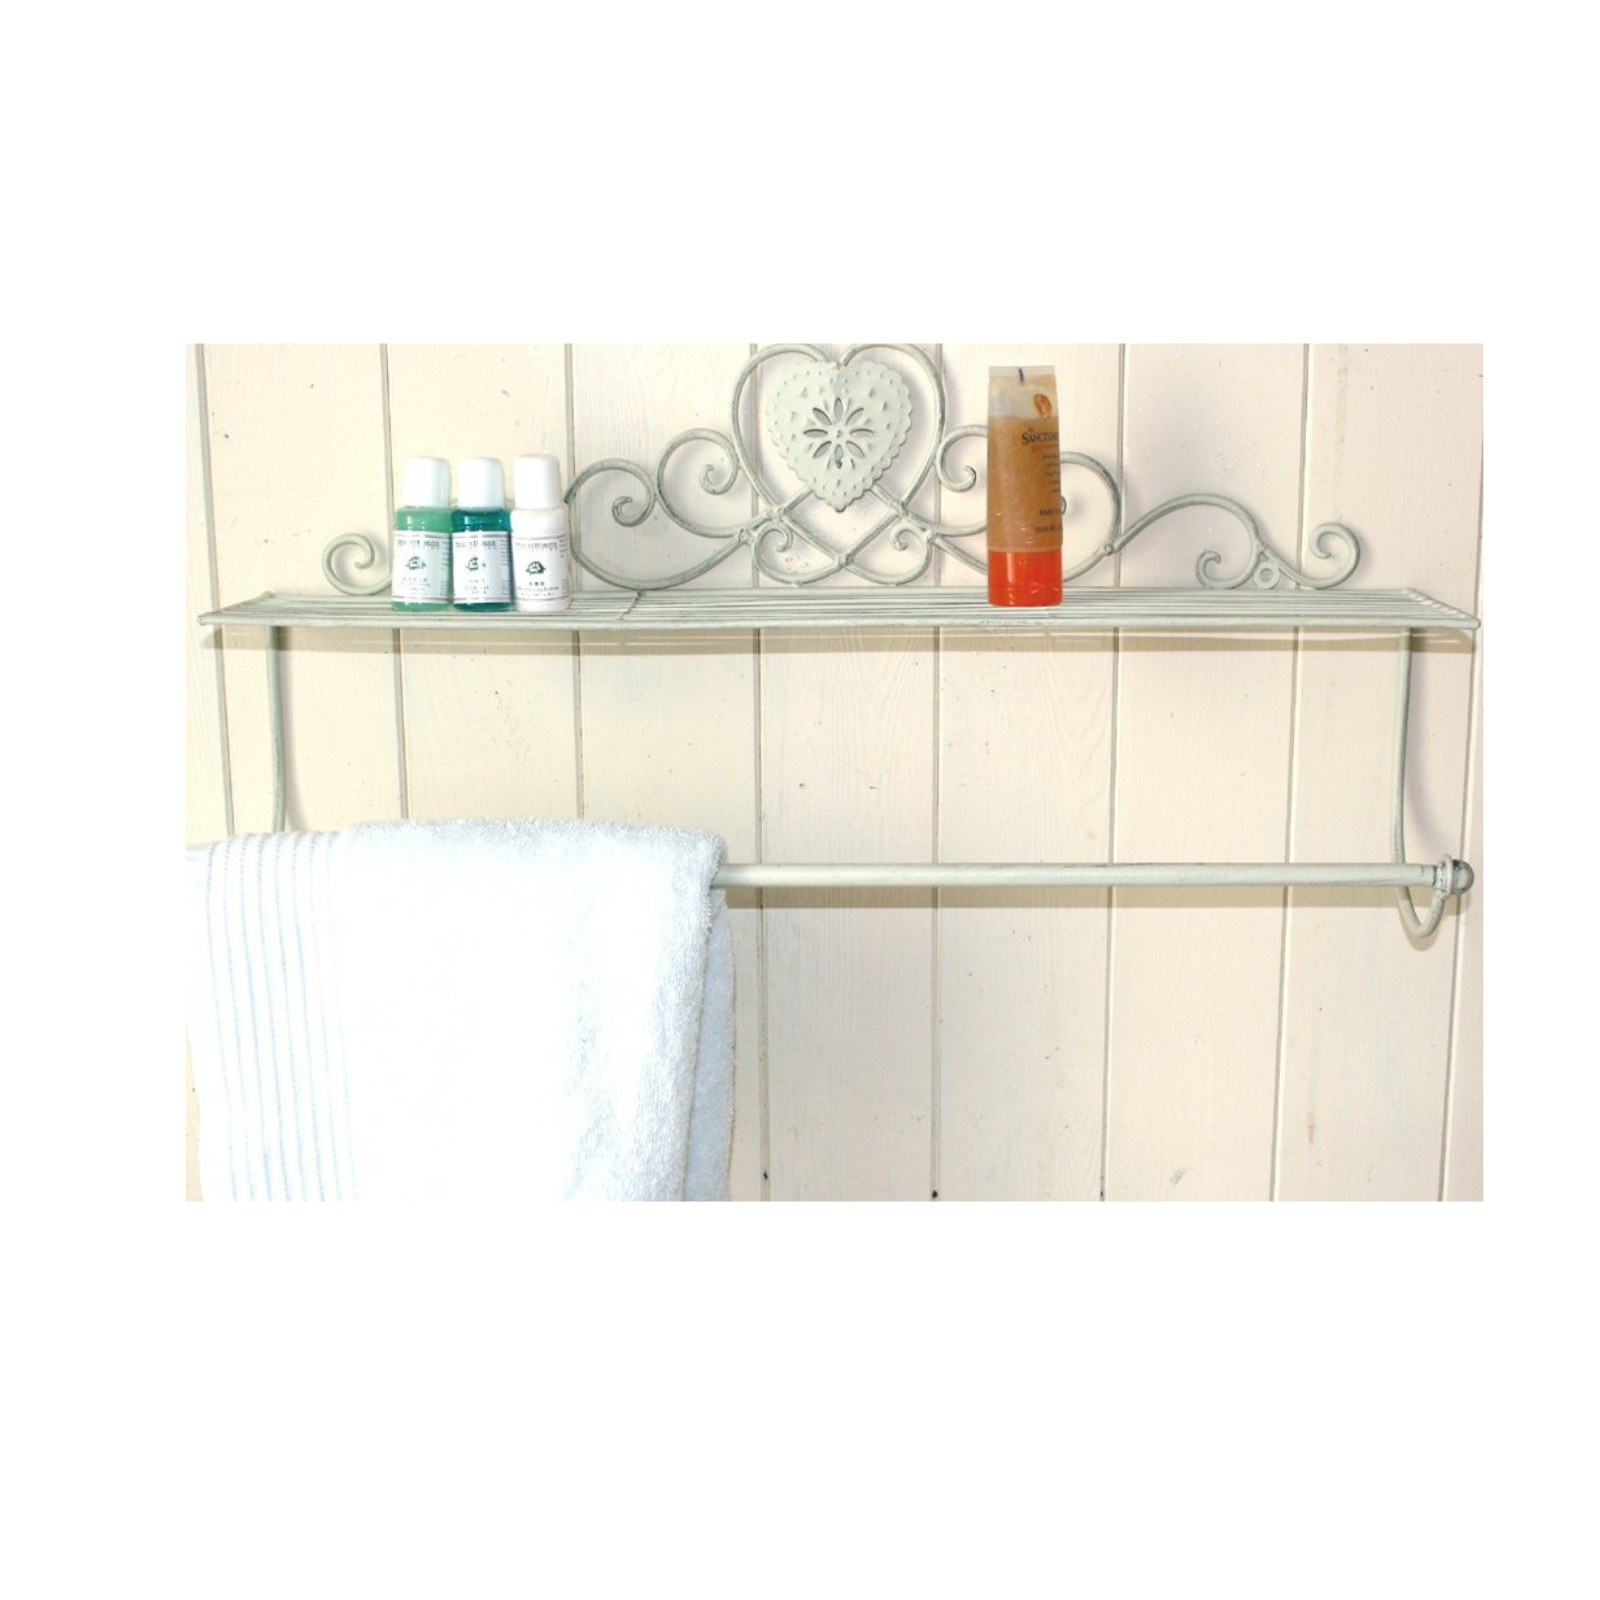 Cream Heart Wall Shelf With Towel Rail